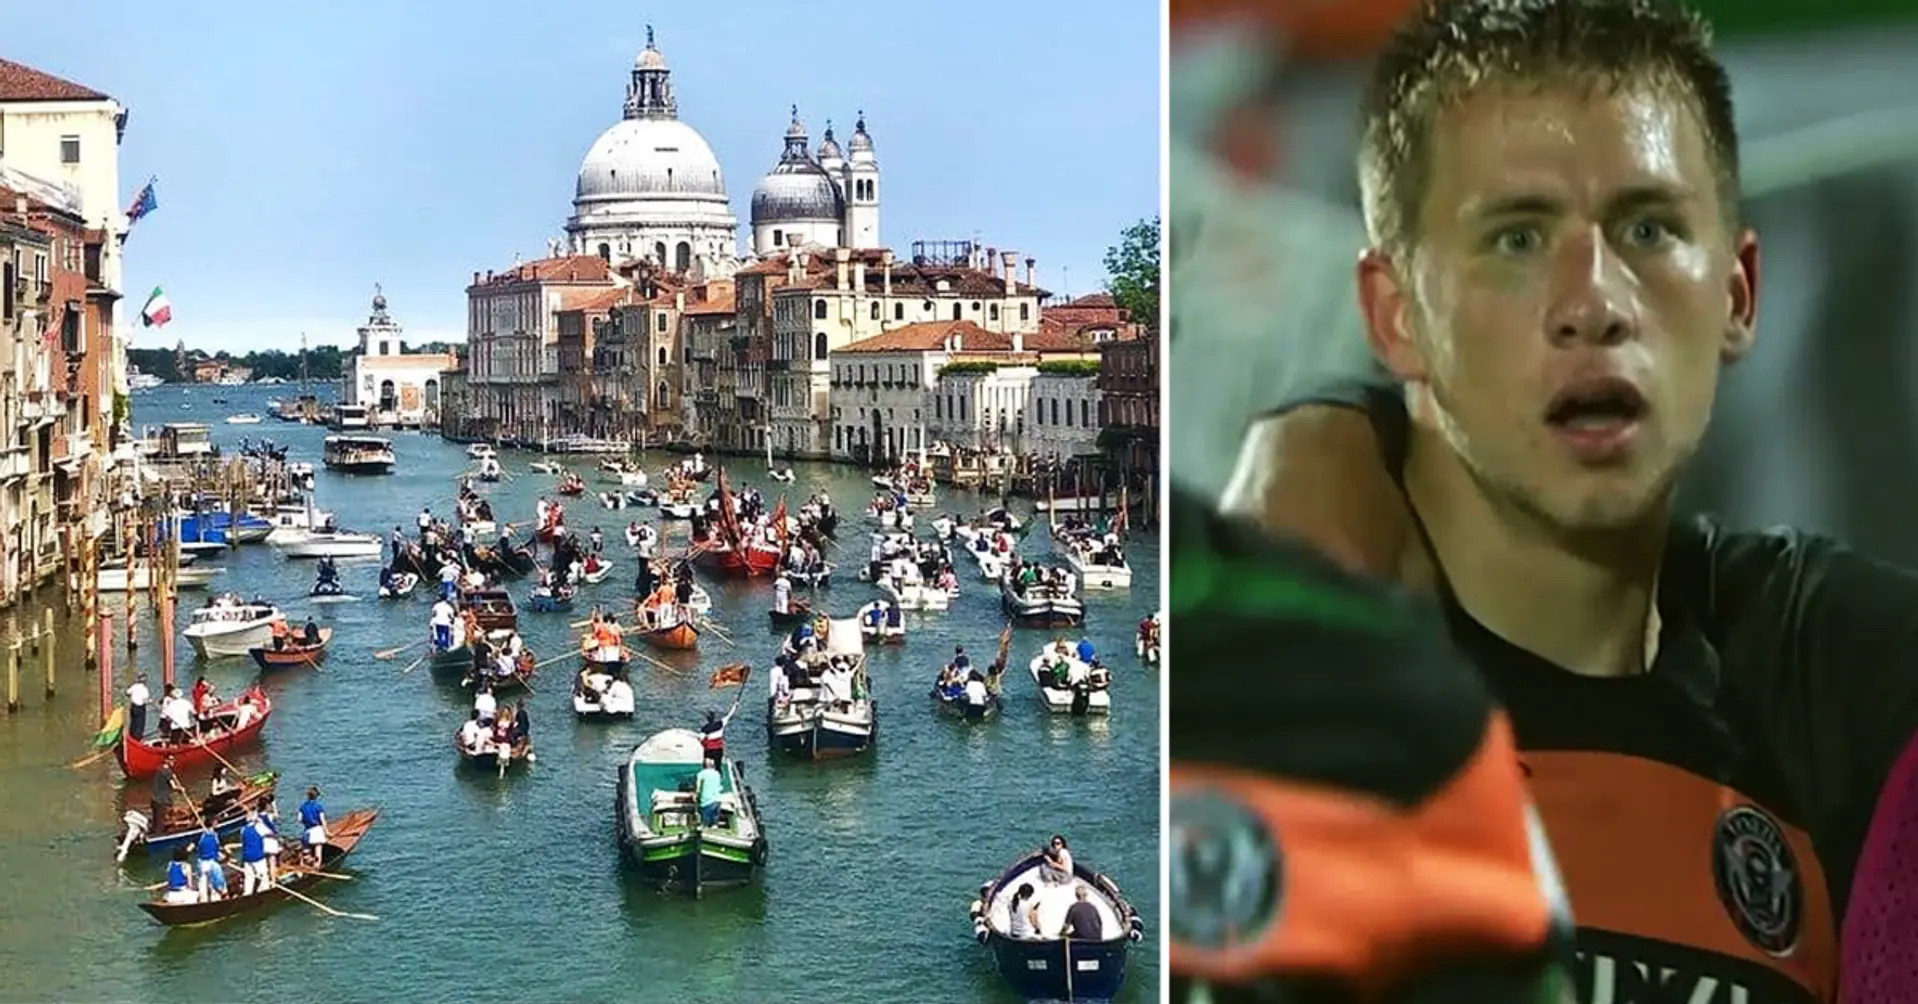 Italian club Venezia FC celebrate promotion with incredible boat parade in Venice